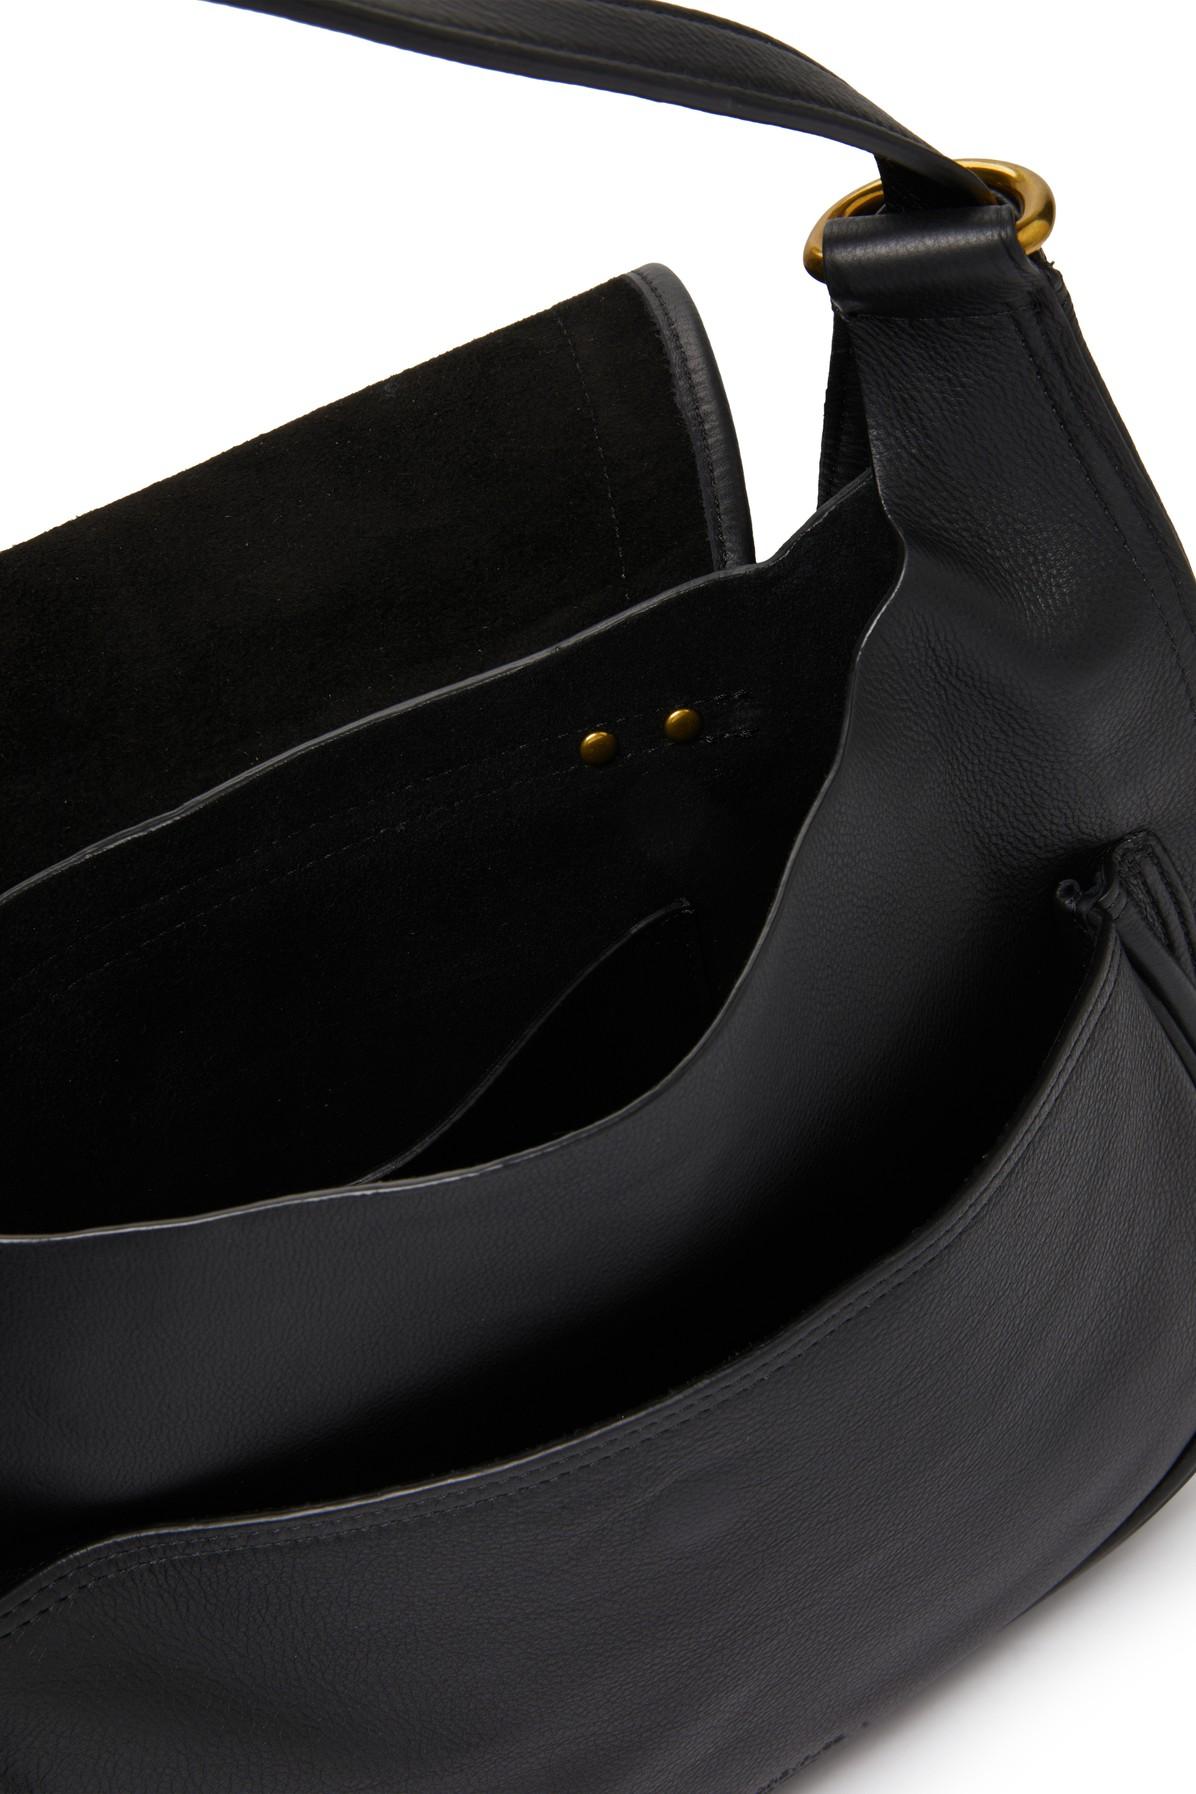 Jerome Dreyfuss Philippe Shoulder Bag in Tabac – Hampden Clothing